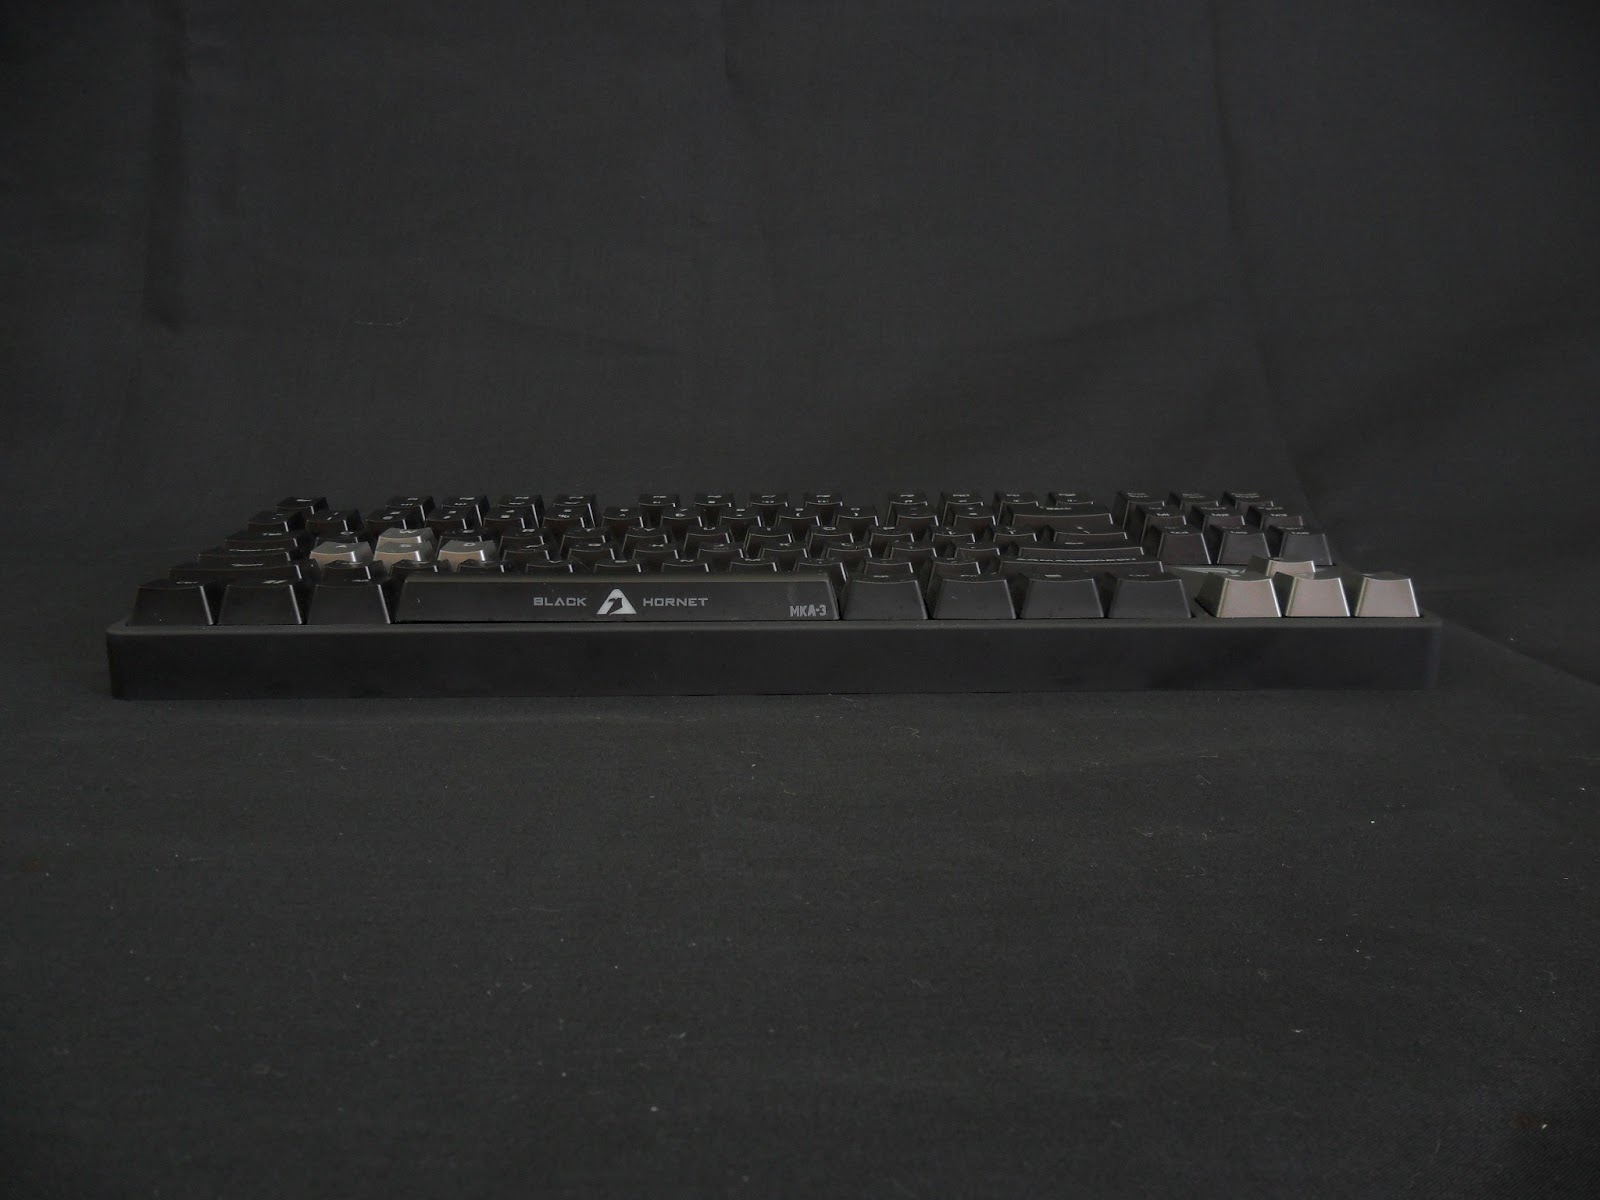 Unboxing & Review: Armaggeddon Black Hornet MKA-3 Mechanical Gaming Keyboard 14